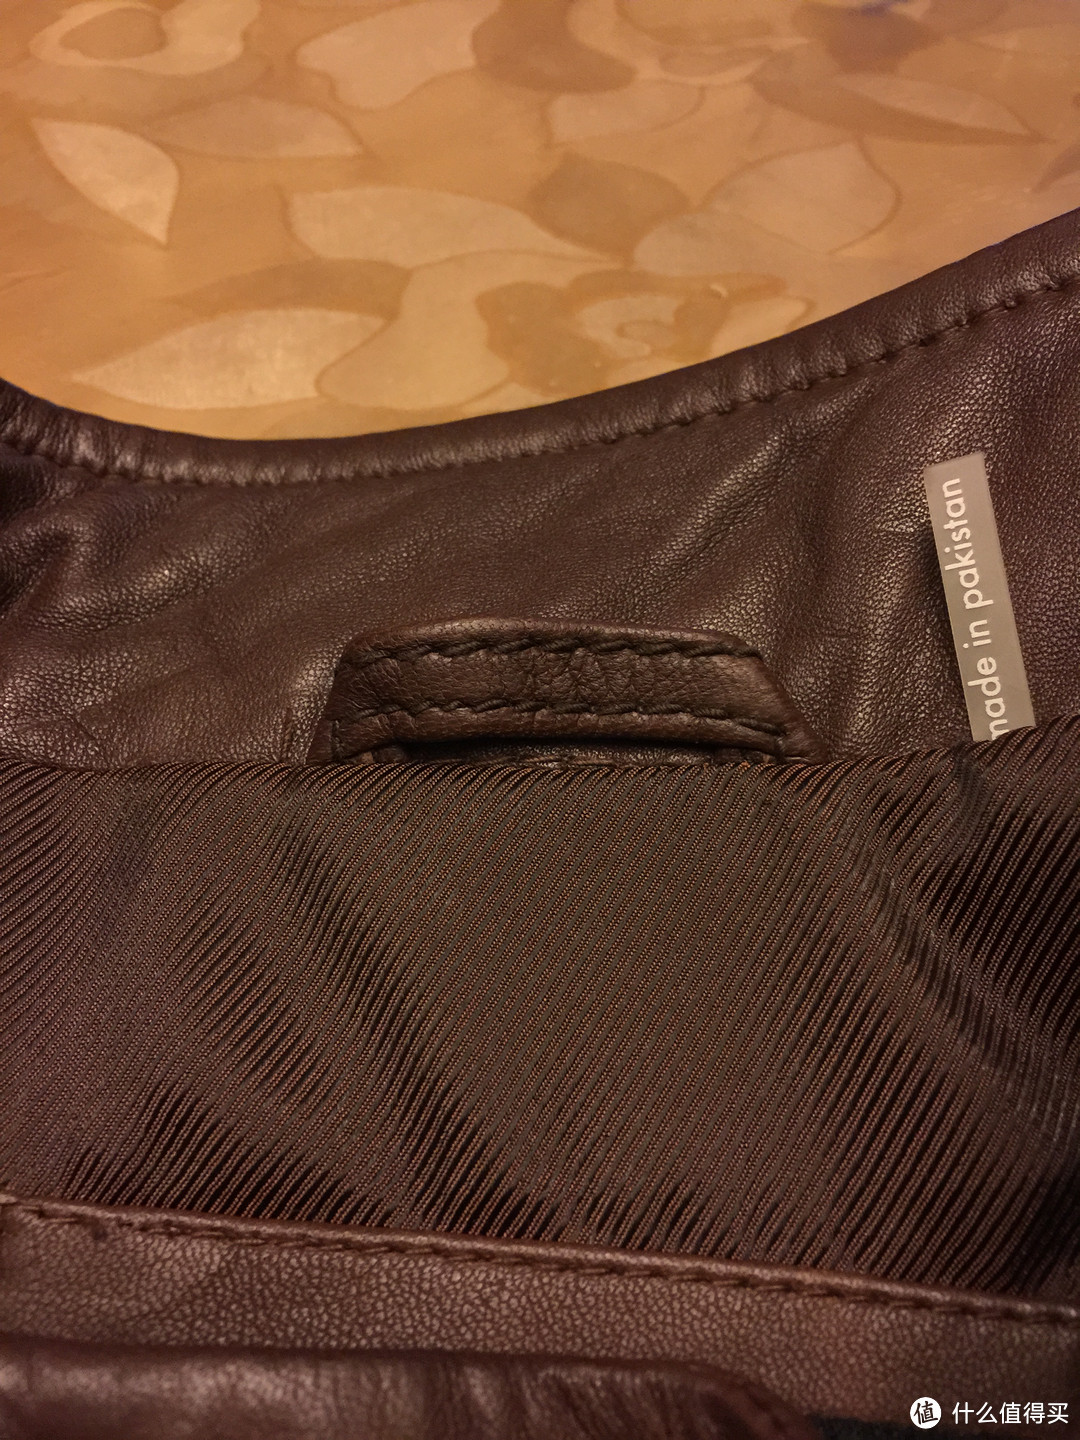 Wilsons Leather官网上购得CK同门品牌皮衣：值得期待的Black rivet 附我的吐血皮衣路